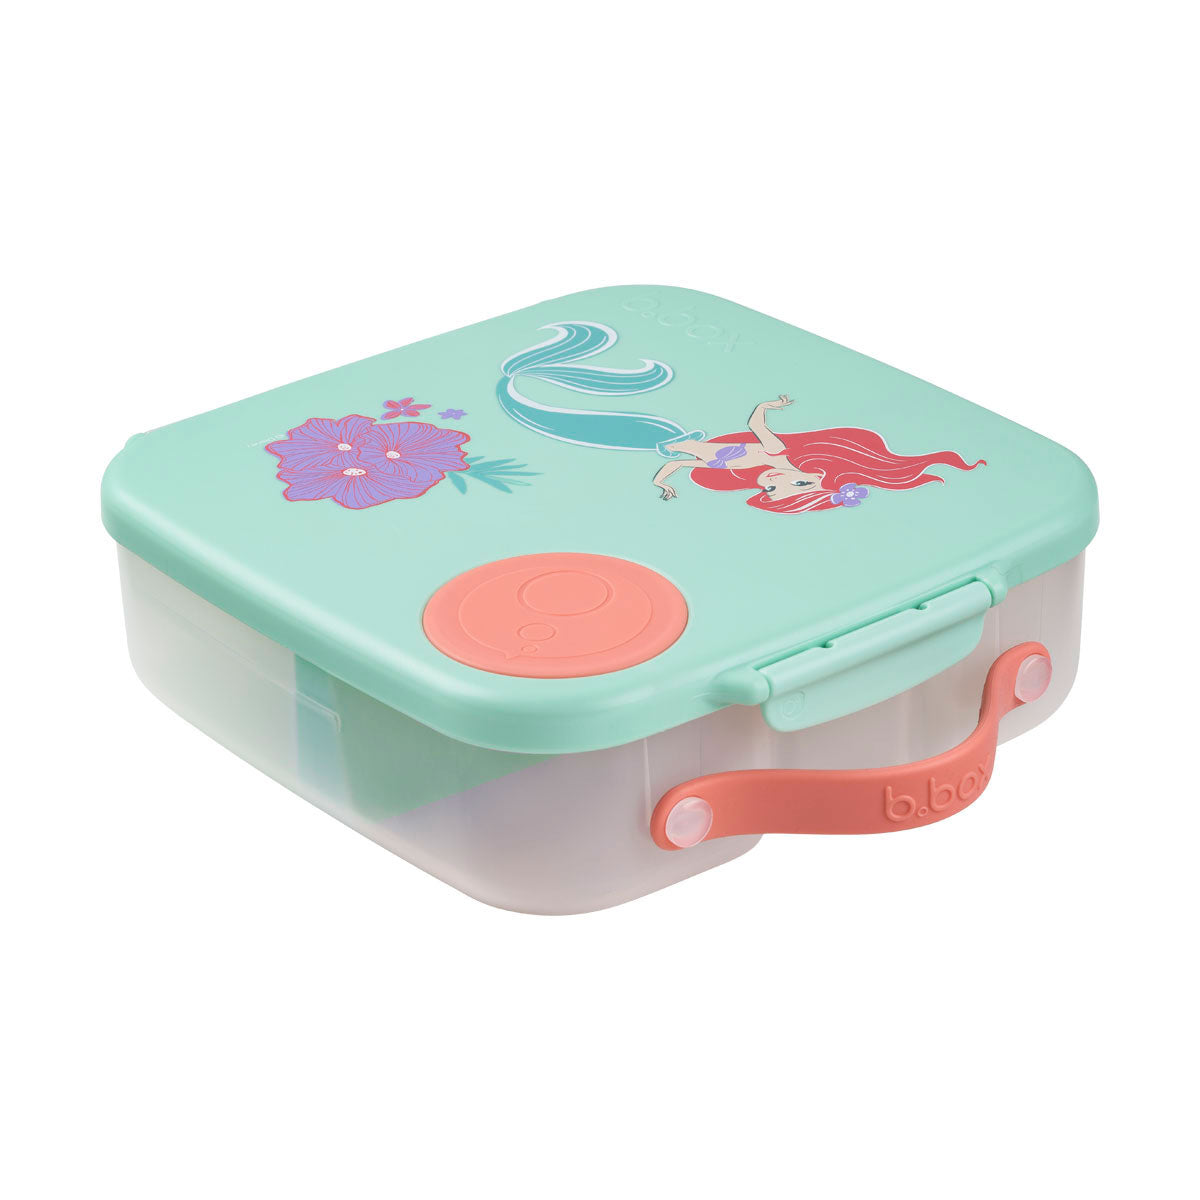 The Little Mermaid original lunch box by bbox